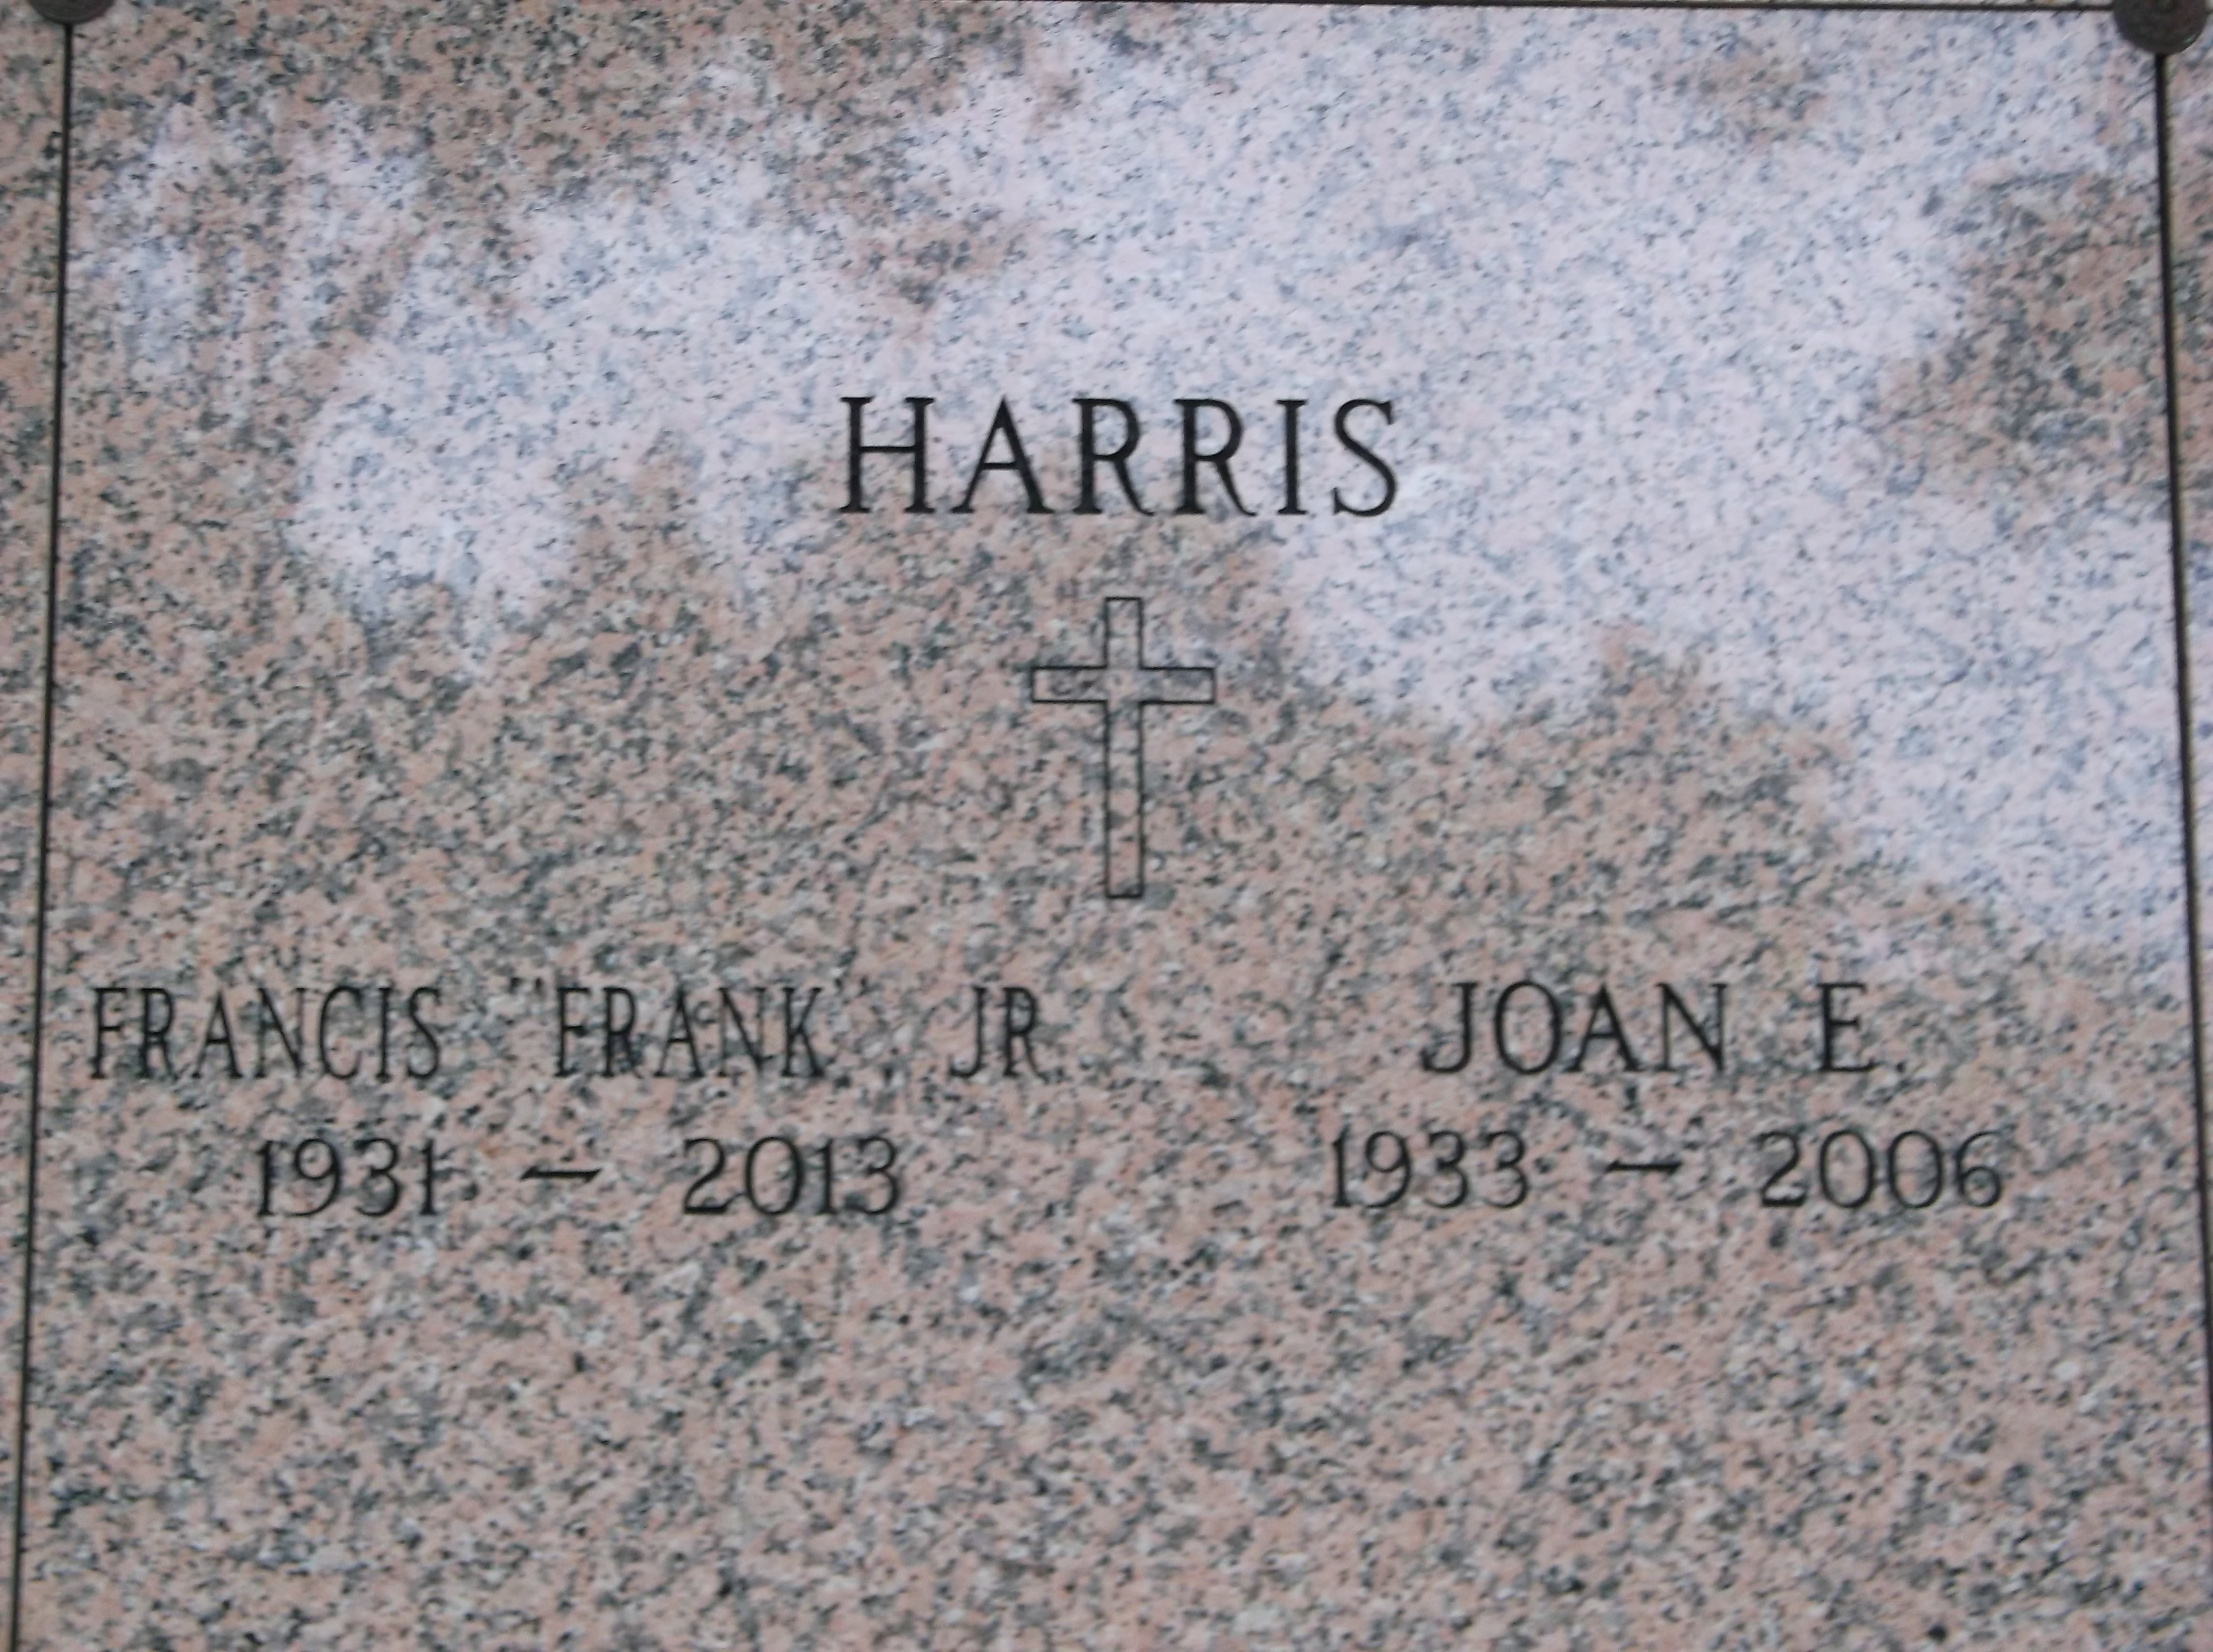 Joan E Harris